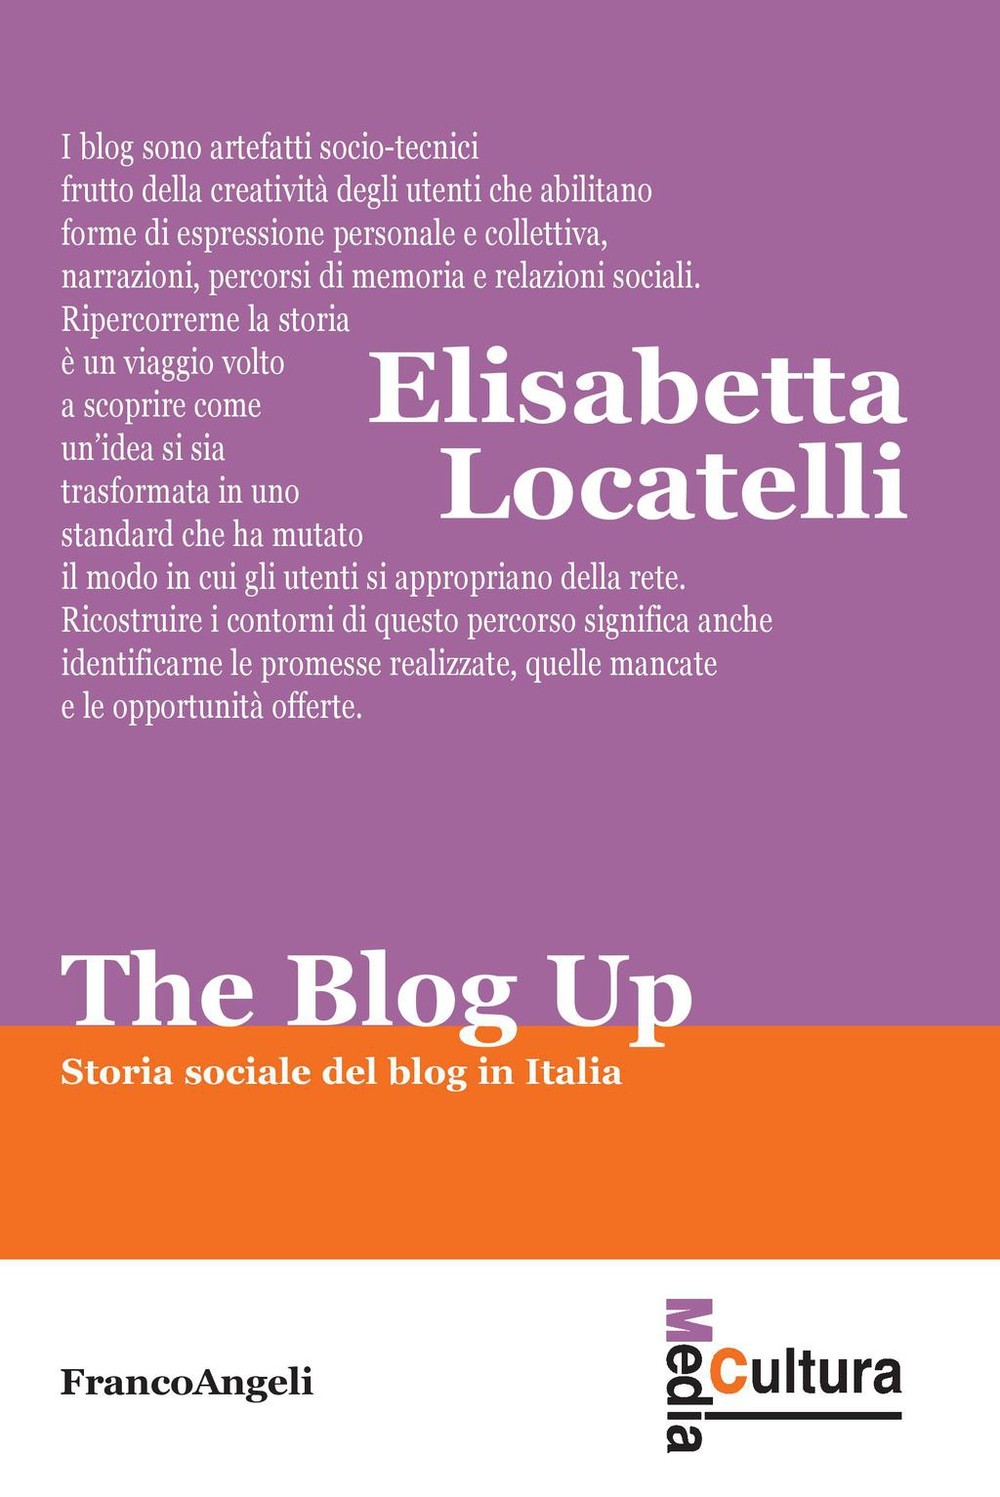 The Blog up! Storia sociale del blog in Italia - Librerie.coop